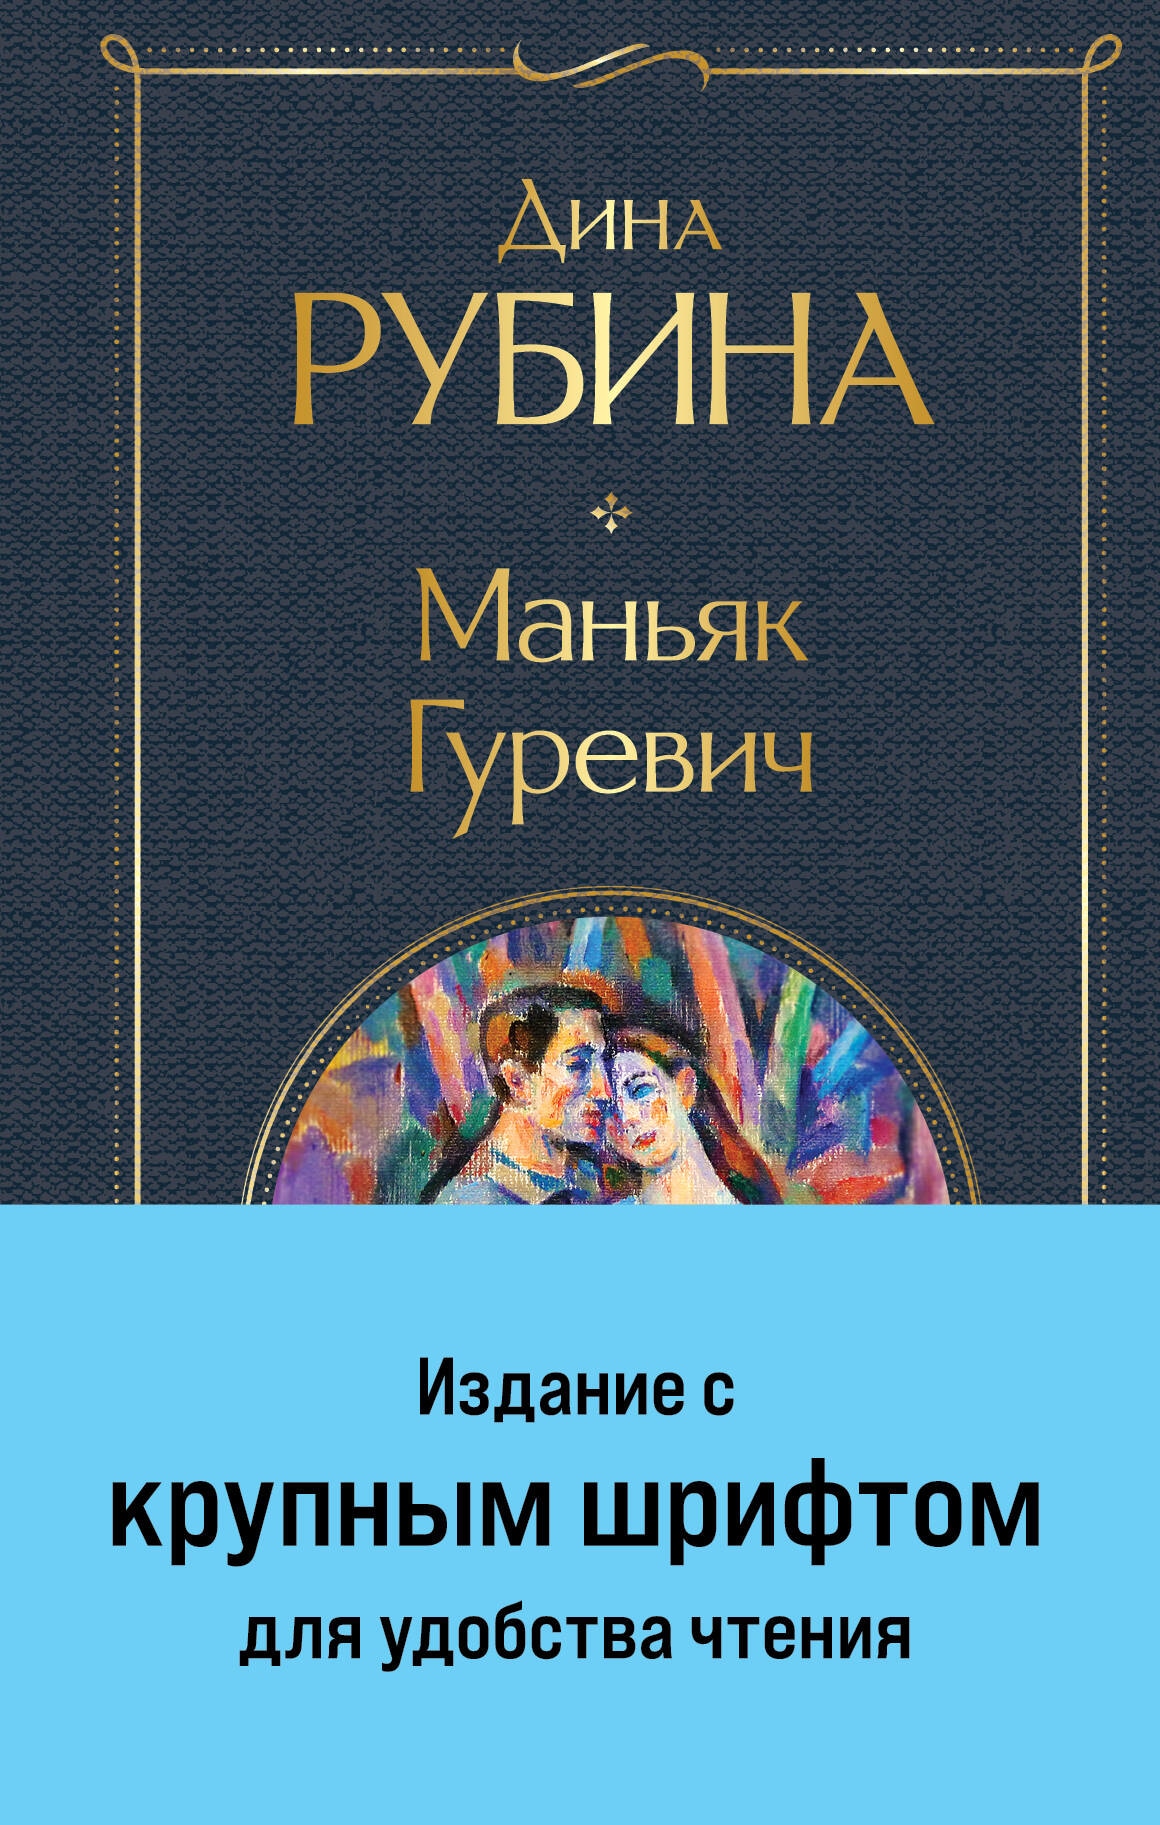 Book “Маньяк Гуревич” by Дина Рубина — 2023